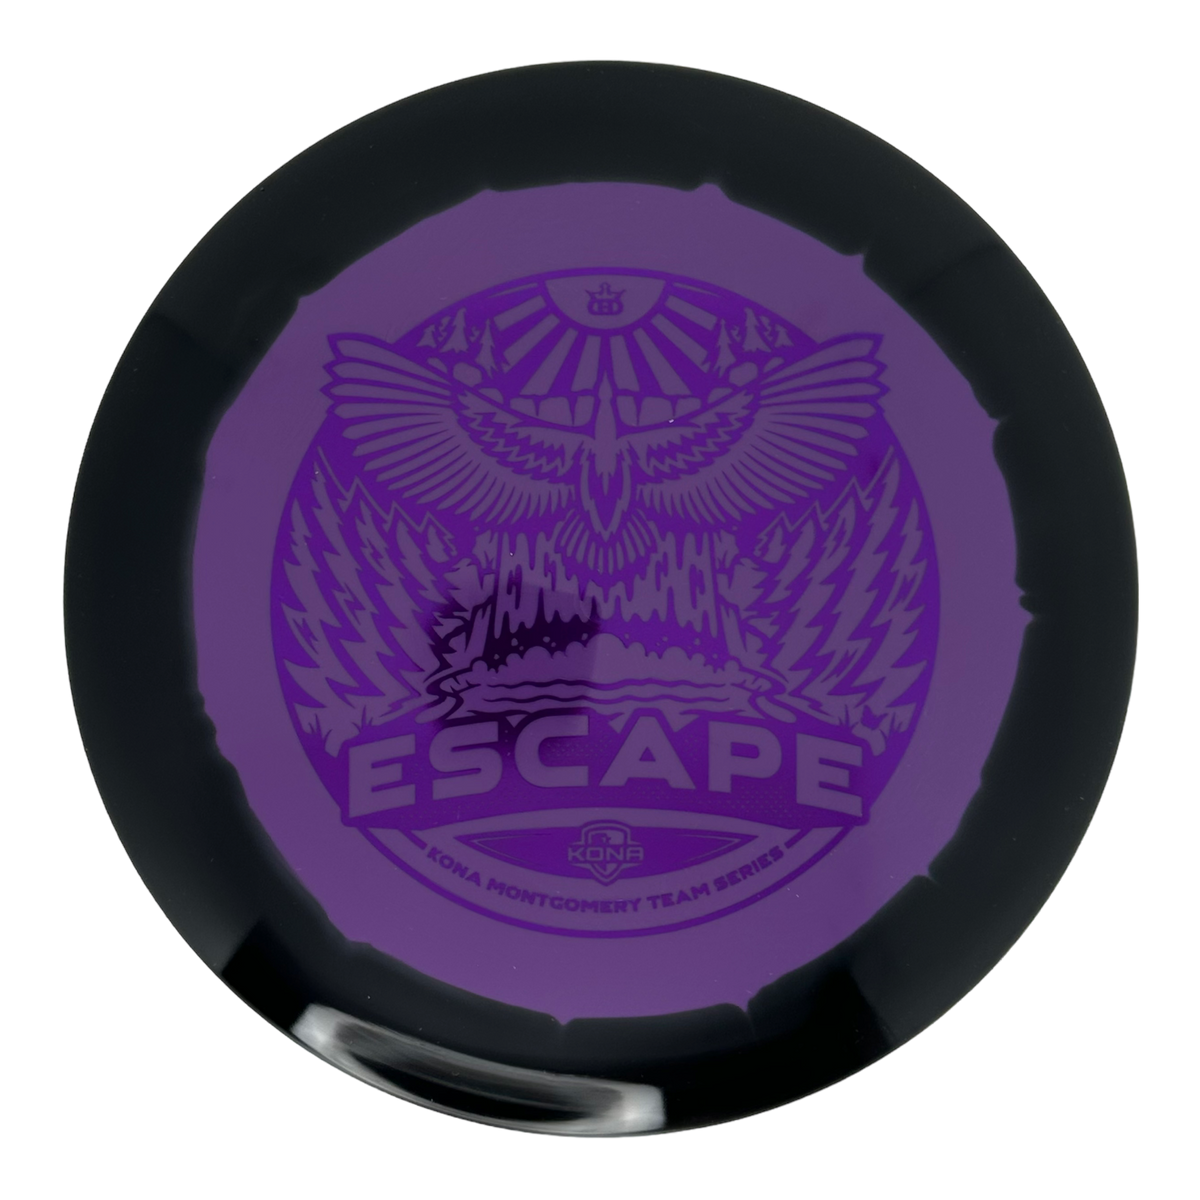 Dynamic Discs Fuzion Orbit Escape - Kona Montgomery (2023)